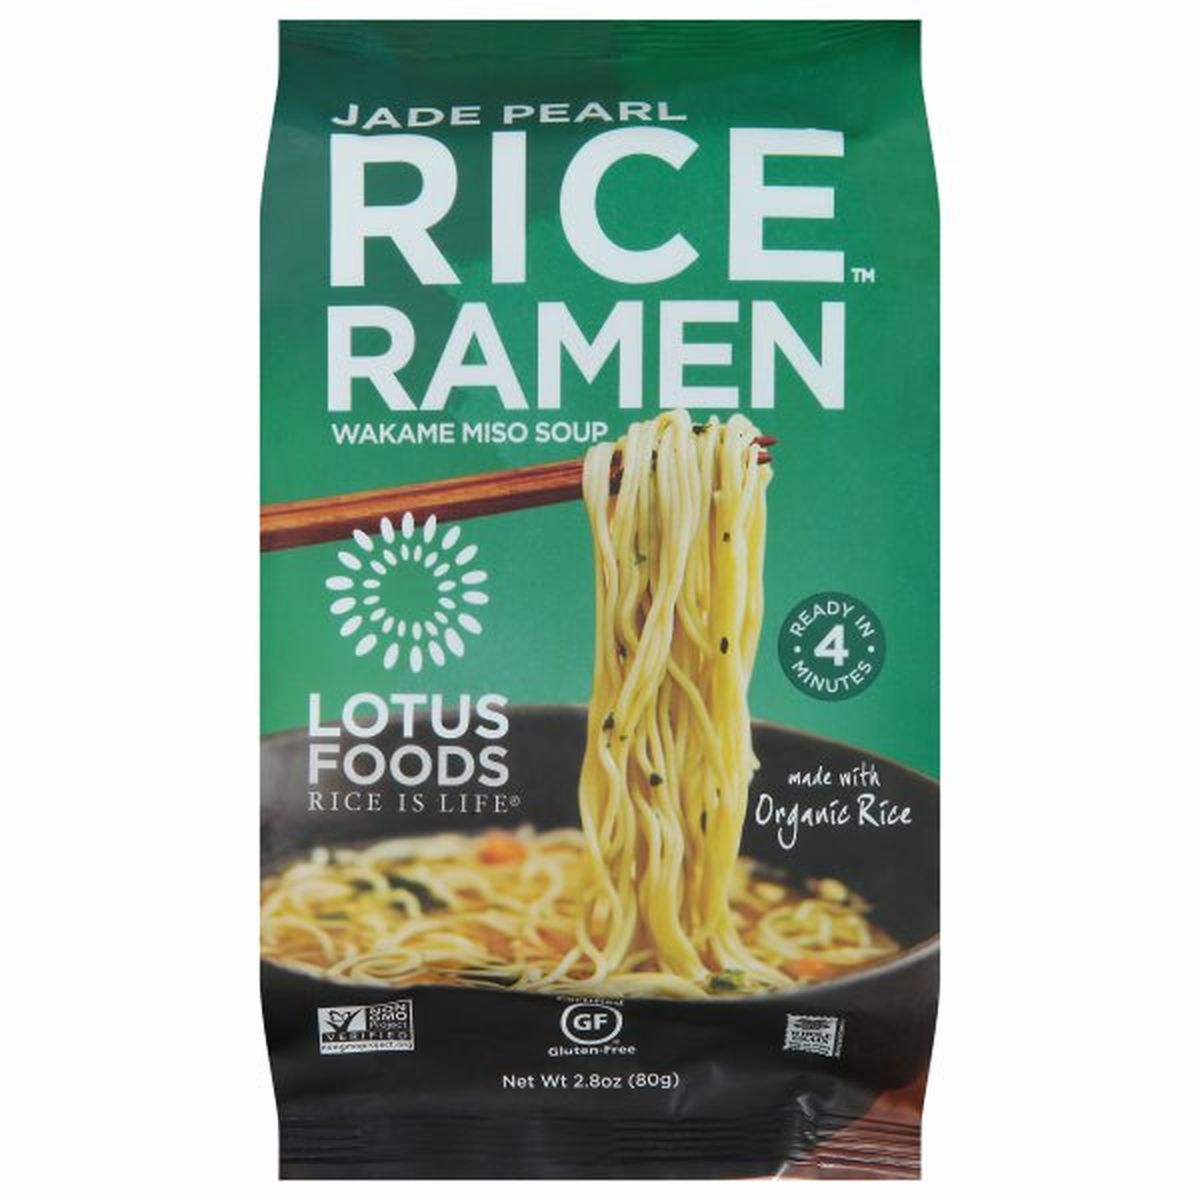 Calories in Lotus Foods Rice Ramen Wakame Miso Soup, Jade Pearl